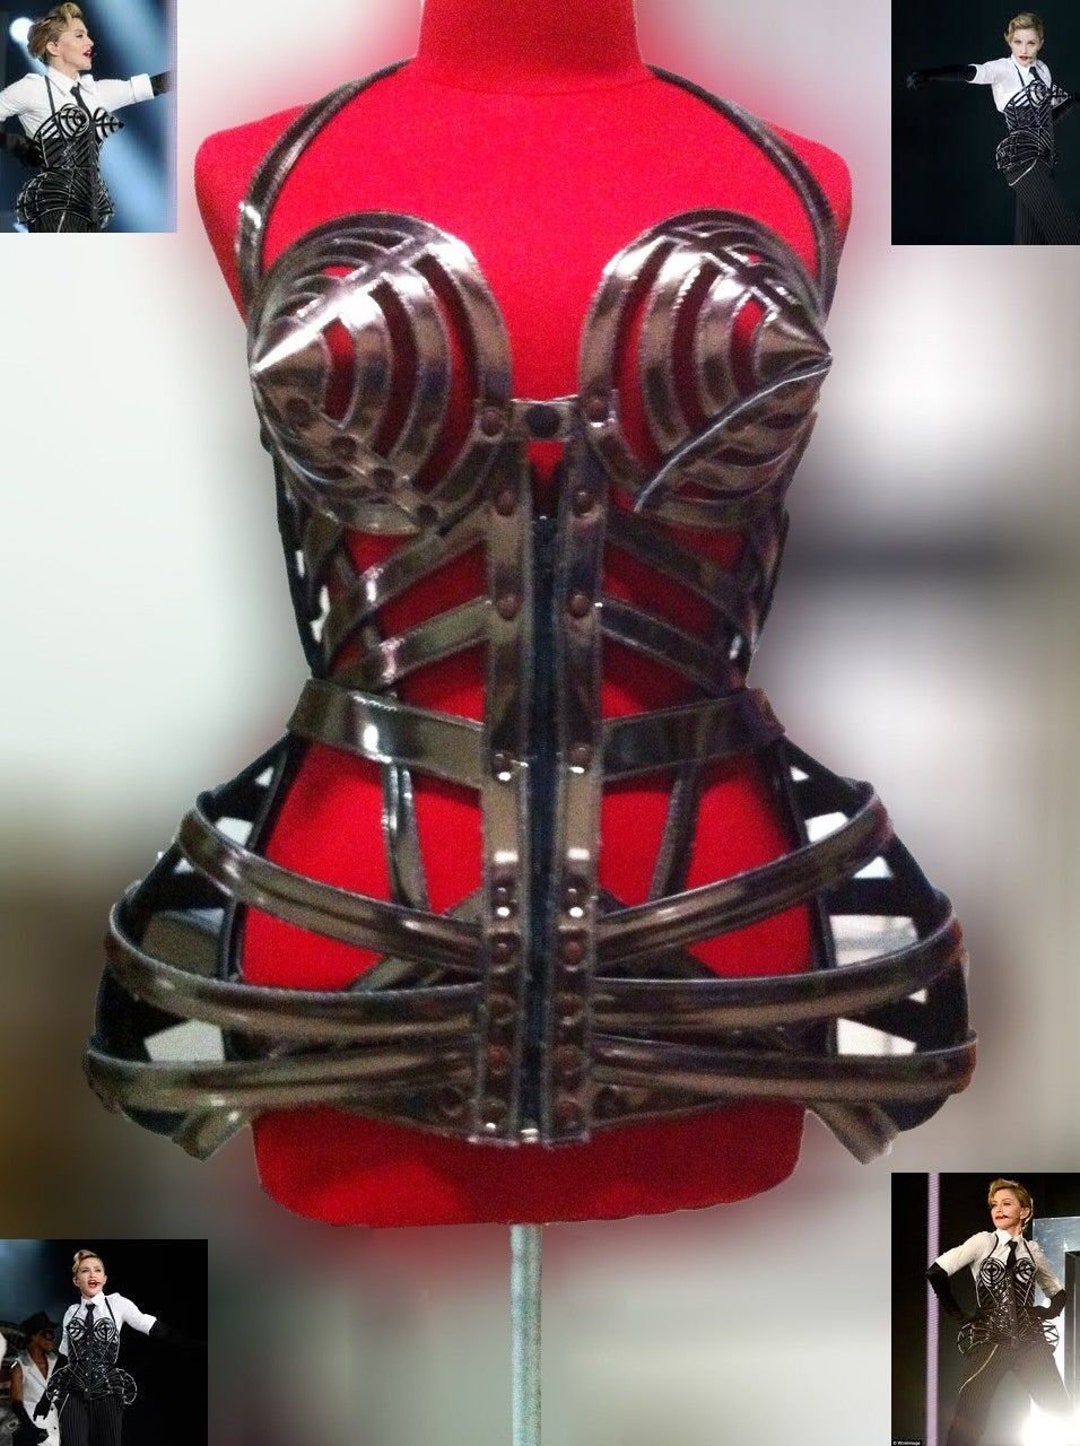 Daneena T029S Tribute Copy Cone Bra Pointy Cage Leather Madonna Costume  XS-XL 